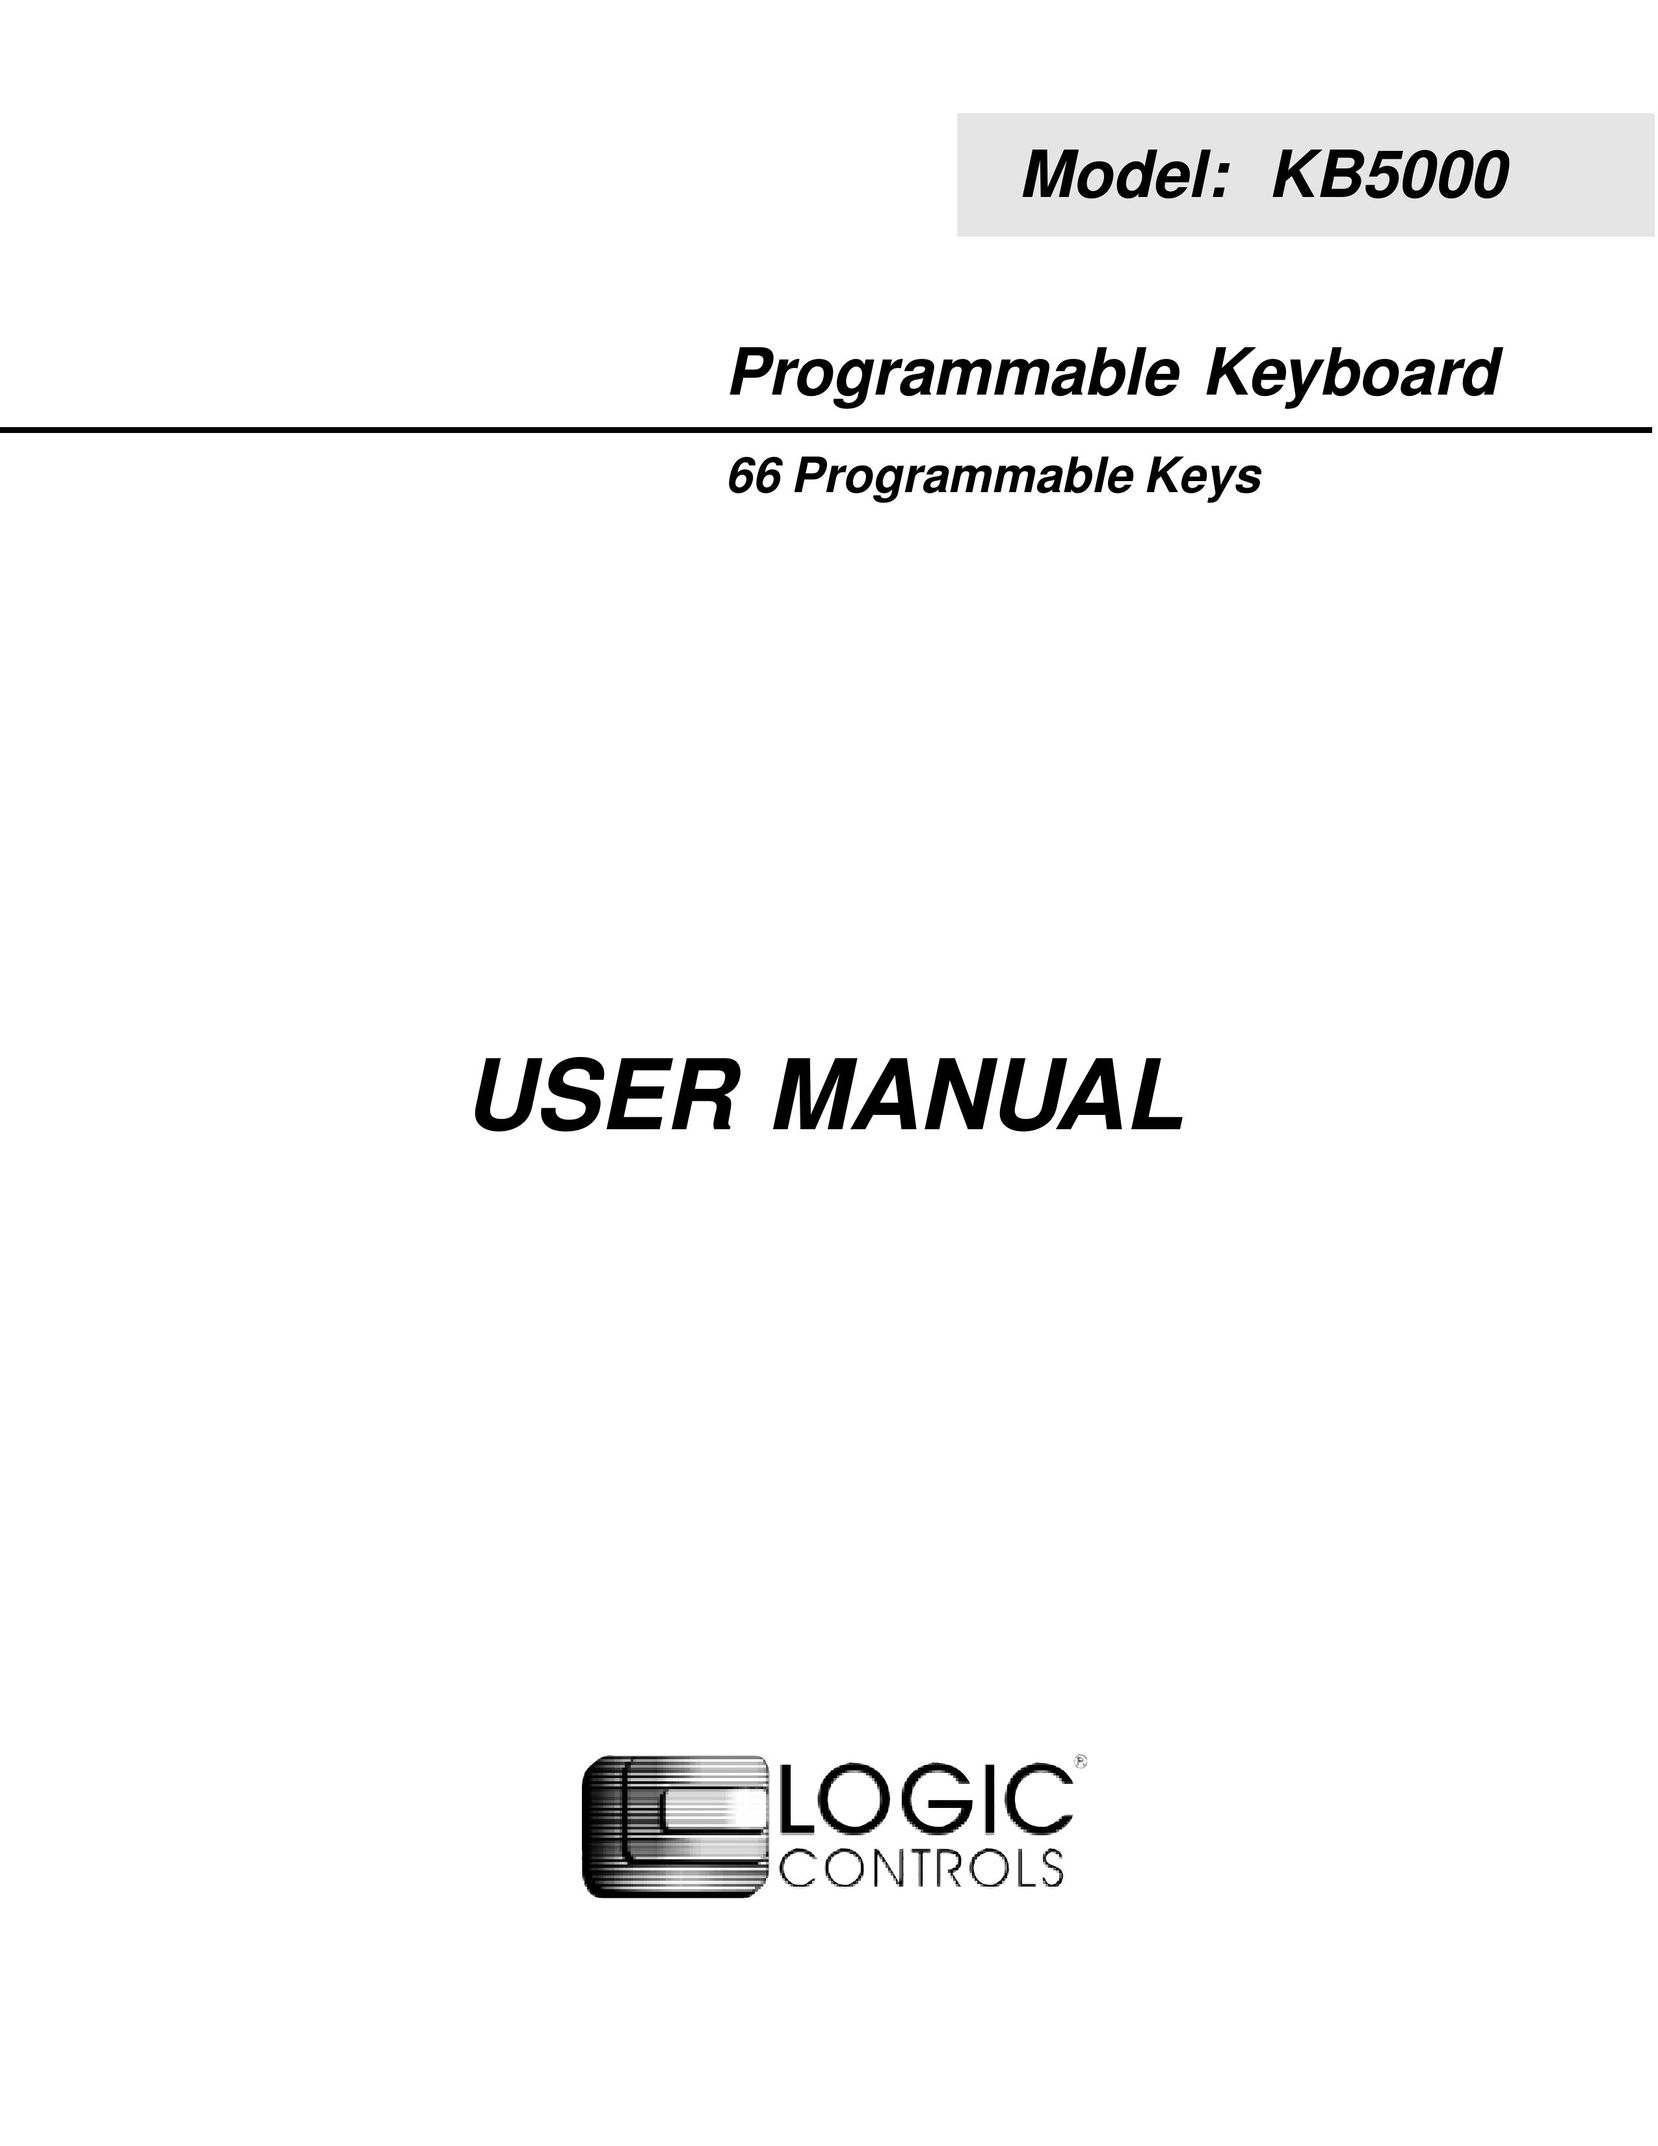 Logic Controls KB5000 Mouse User Manual